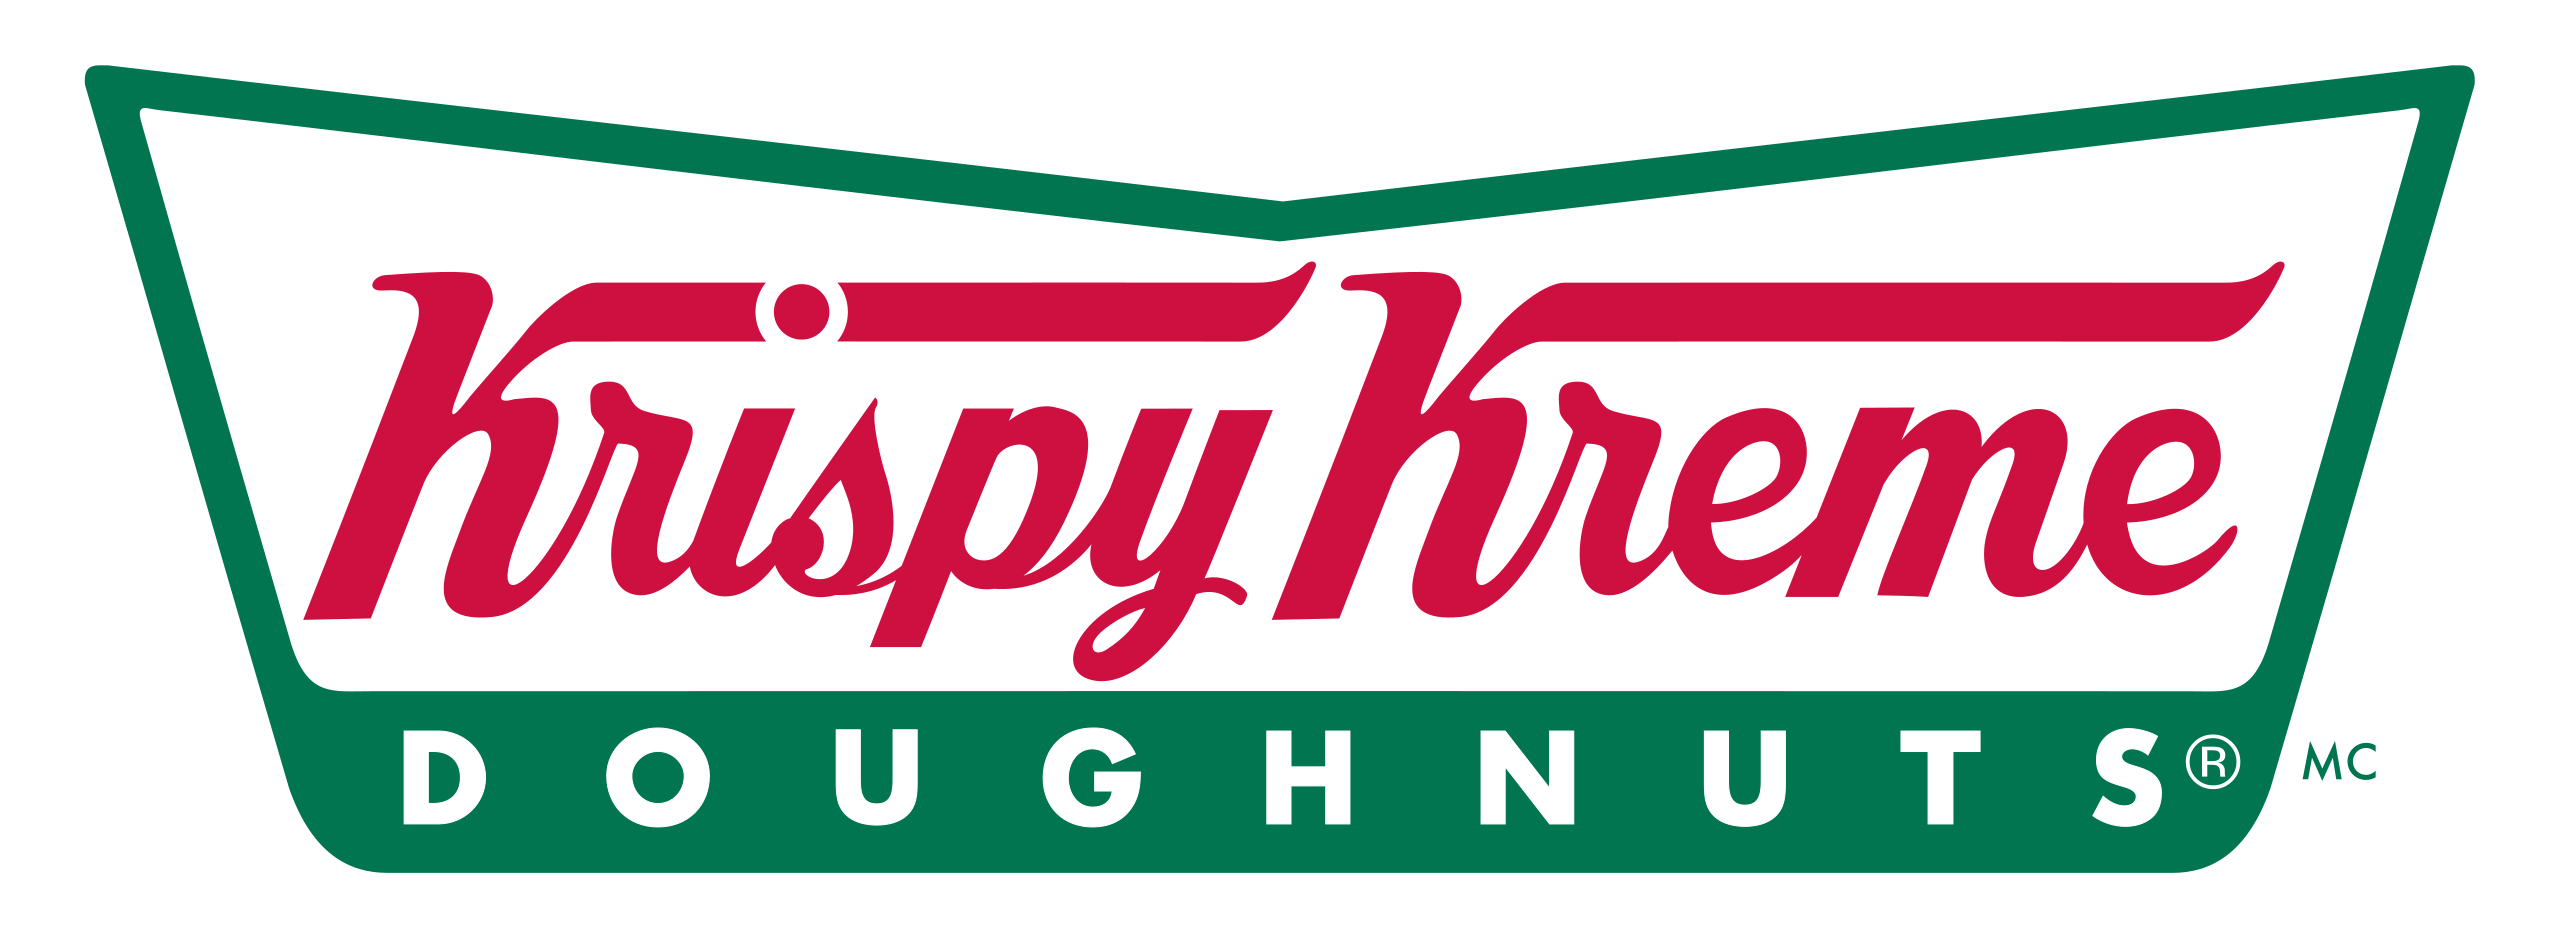 FREE Doughnut When You Join Krispy Kremes Rewards